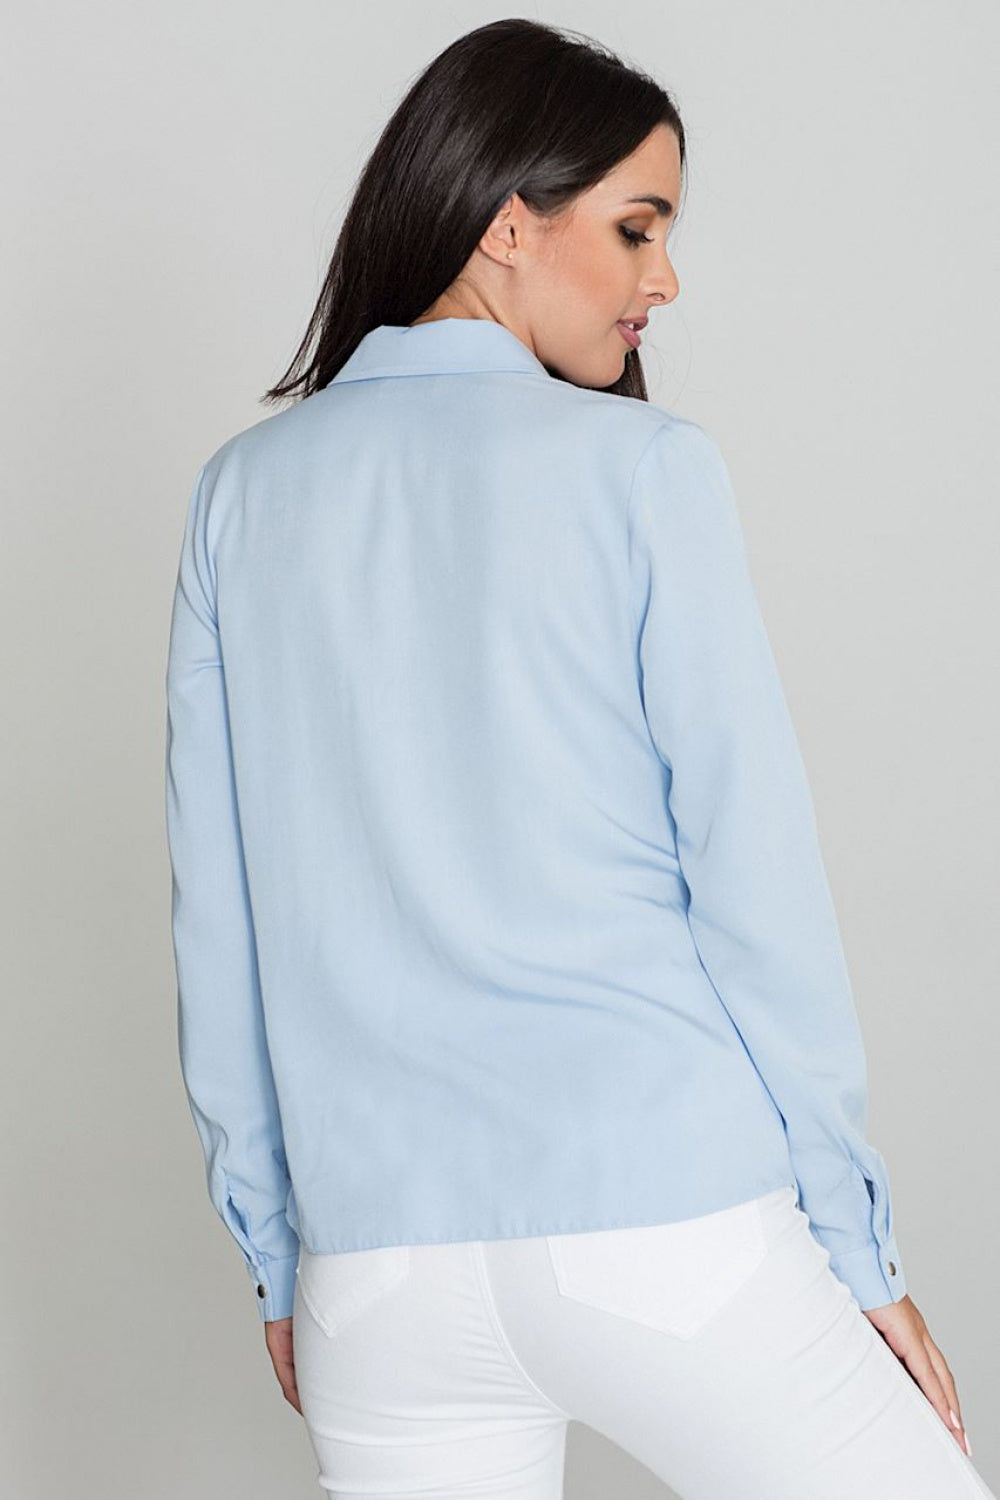 Long sleeve shirt model 111030 Elsy Style Shirts for Women